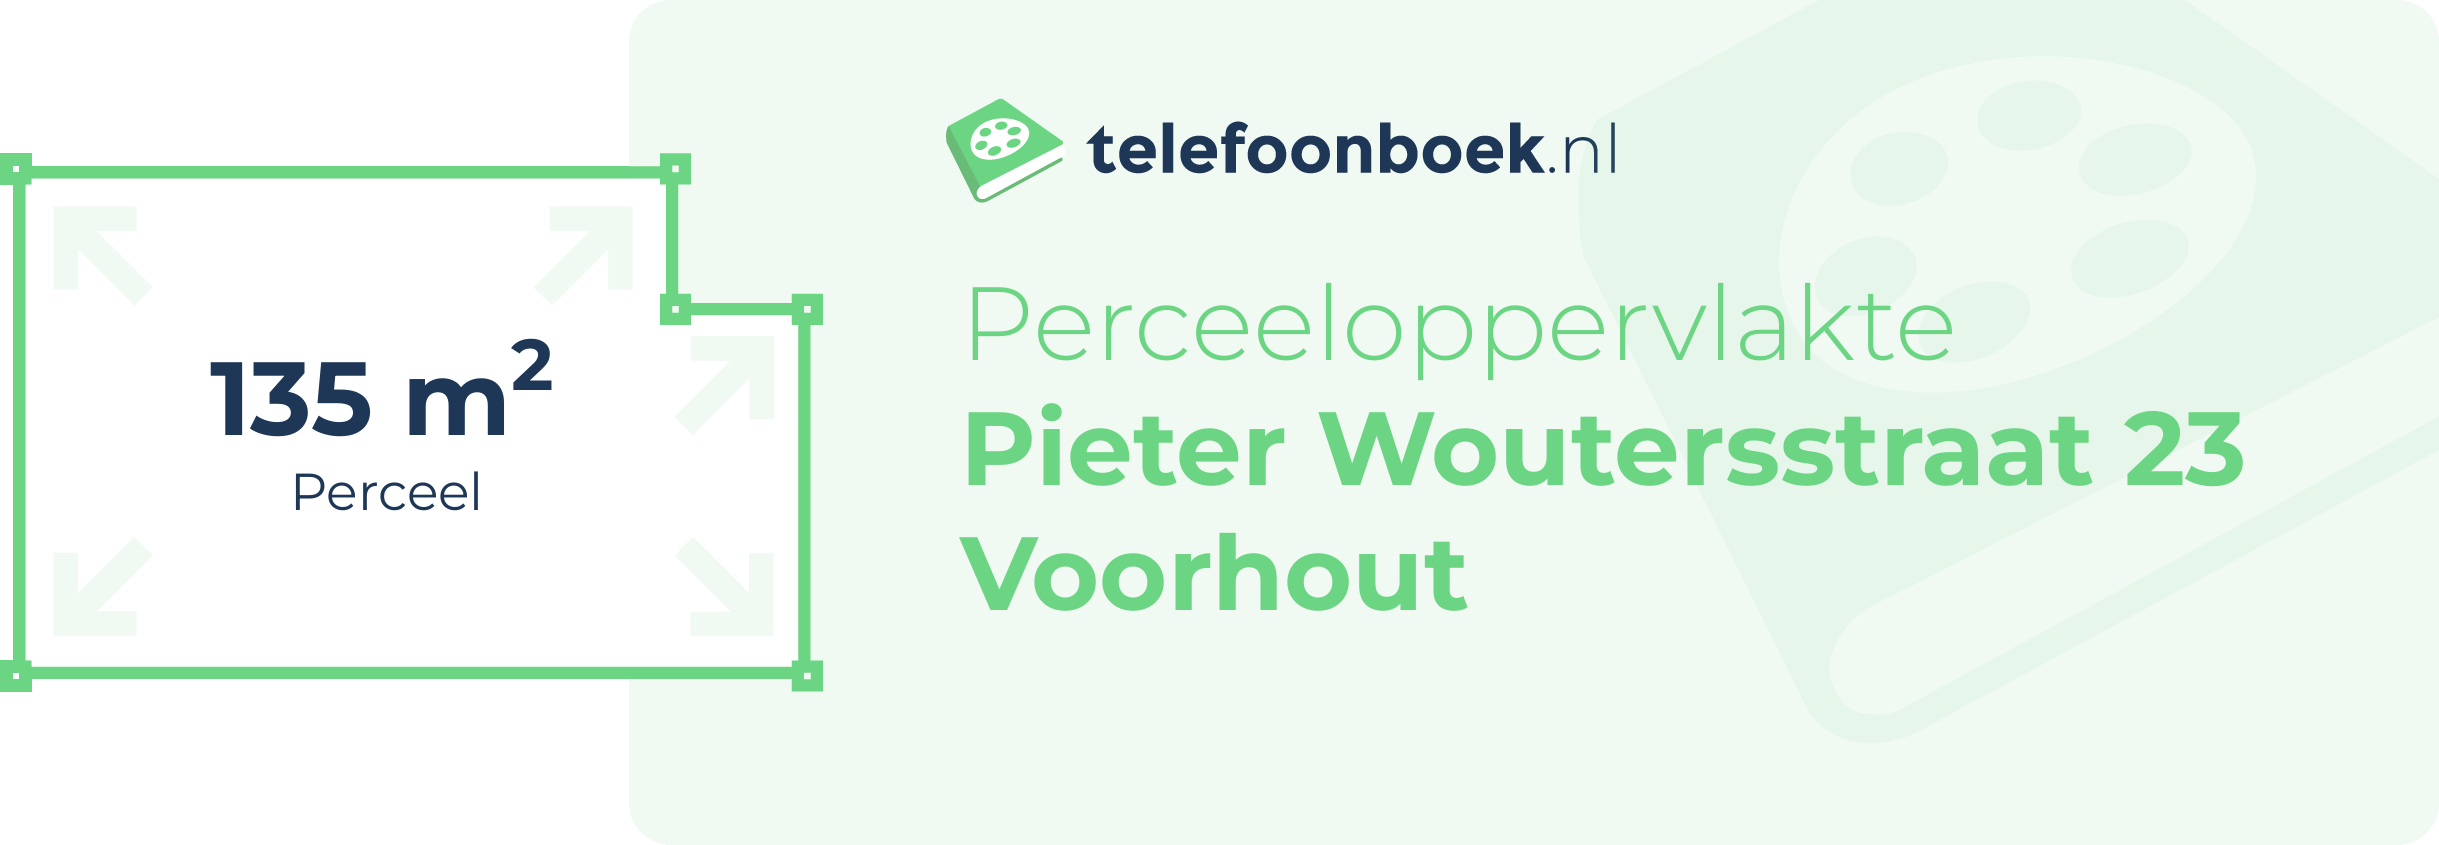 Perceeloppervlakte Pieter Woutersstraat 23 Voorhout